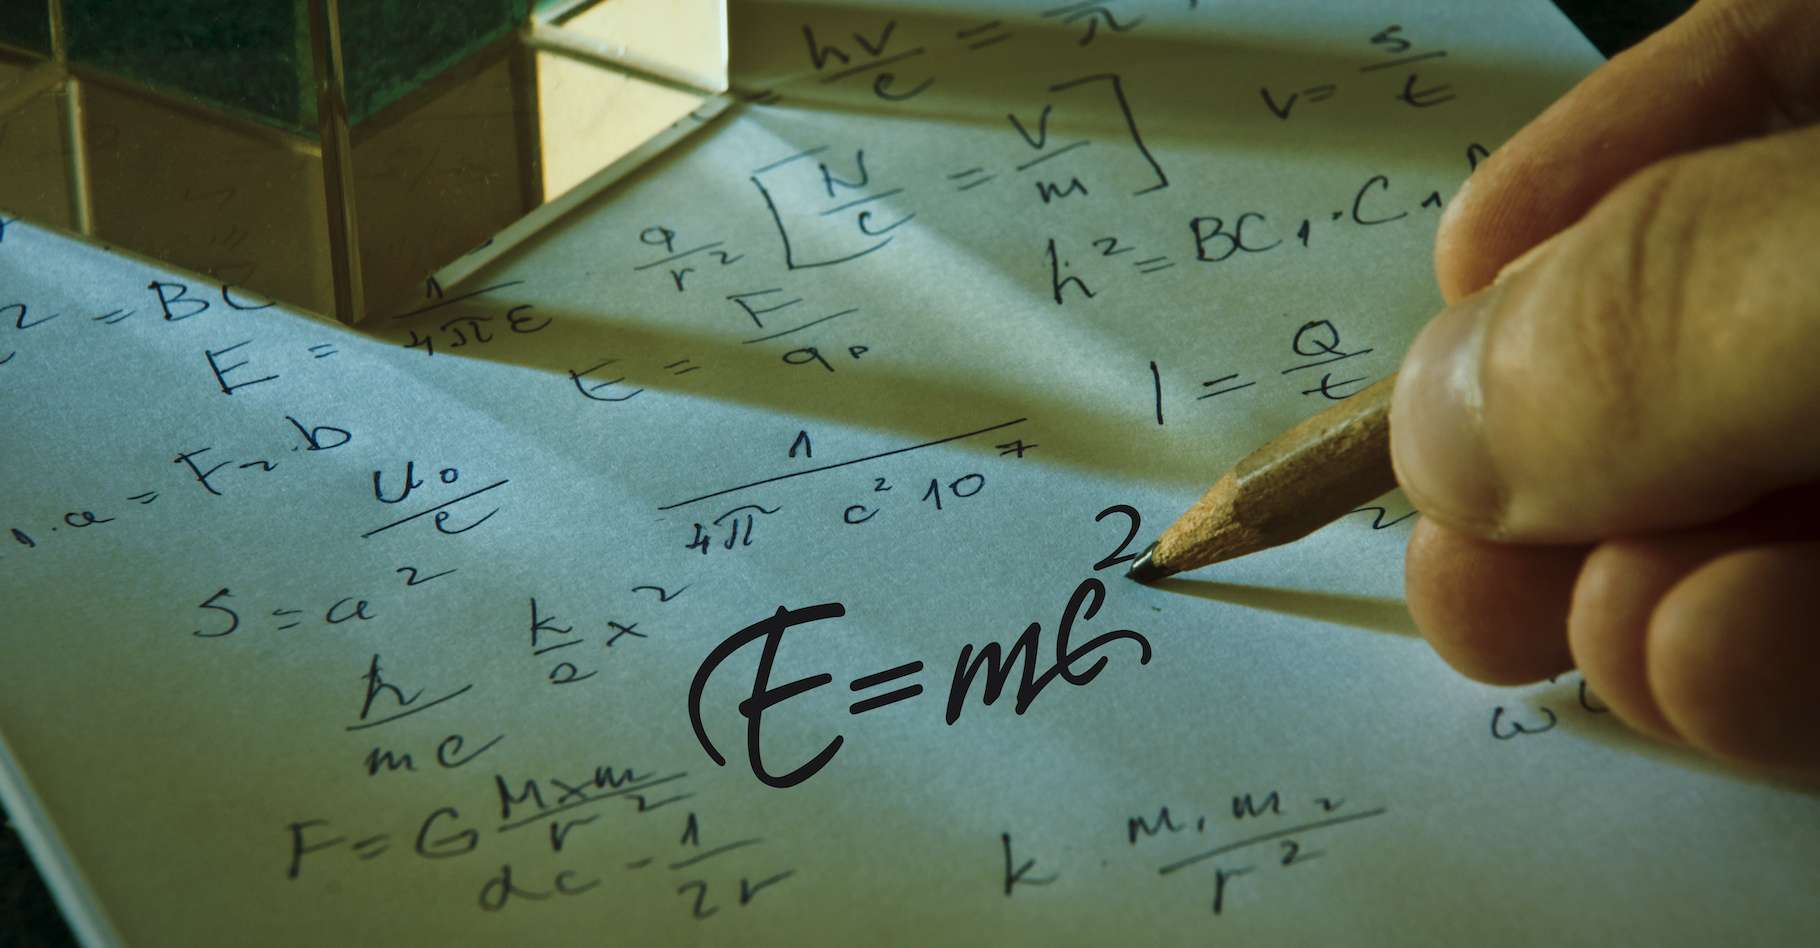 Sebuah manuskrip Albert Einstein dilelang pada Selasa, 23 November 2021. Beberapa bulan lalu, sebuah surat yang menunjukkan E = mc2 yang terkenal itu sudah terjual dengan harga tinggi.  Tapi kali ini, pelelangan telah mencapai ketinggian baru!  © MarkoVS87, Adobe Stock